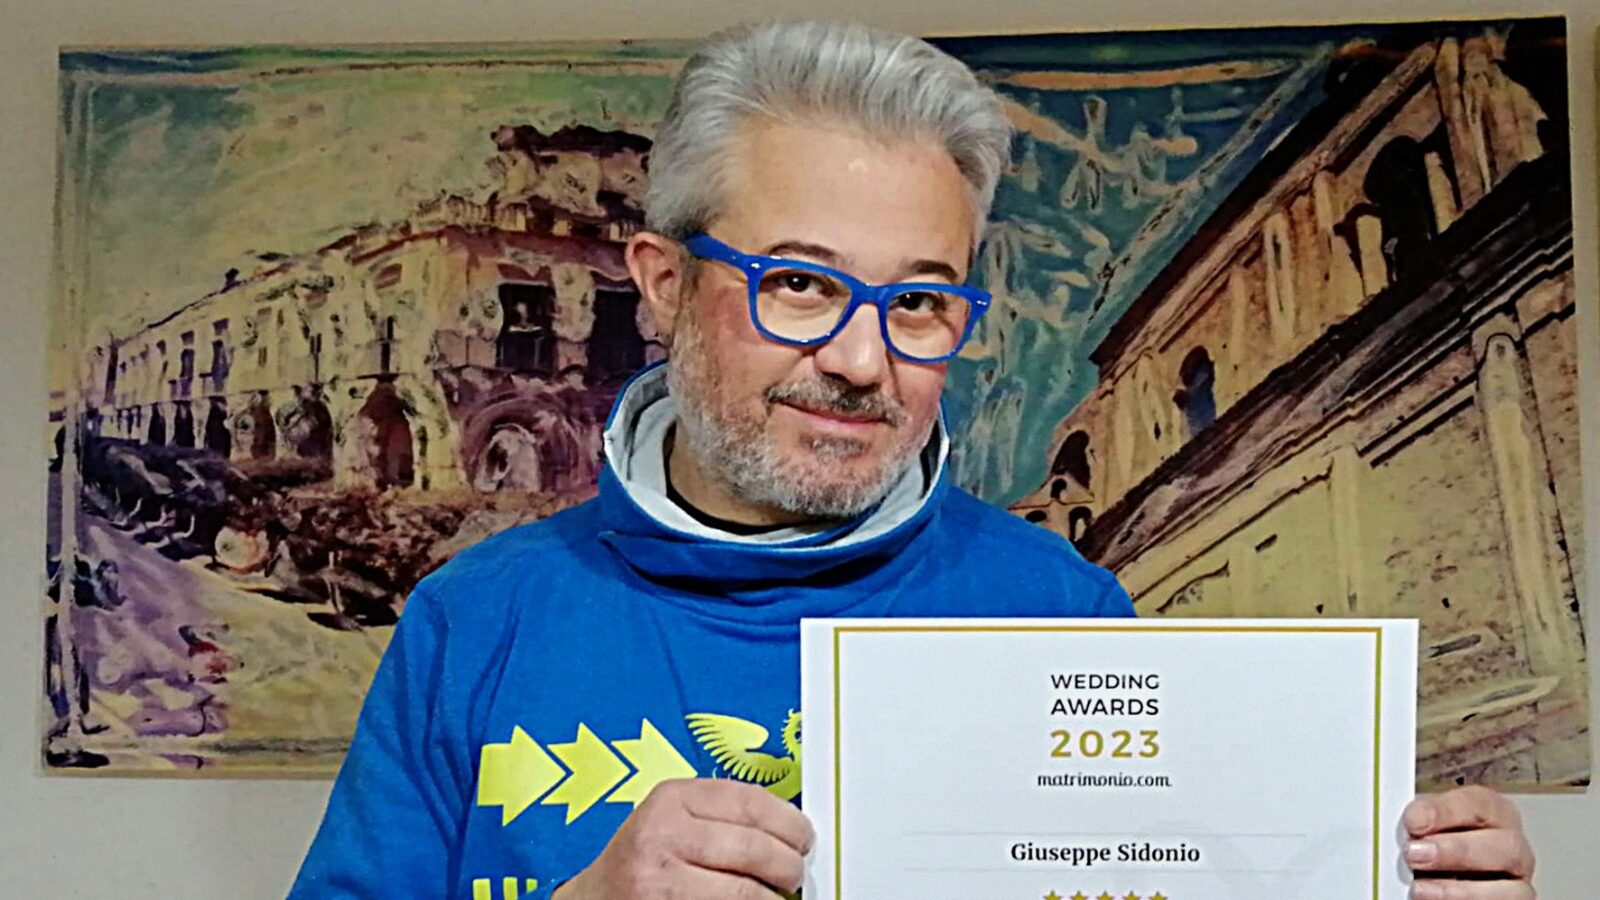 Giuseppe Sidonio, professionista di Ferrandina, vince il Wedding Award 2023